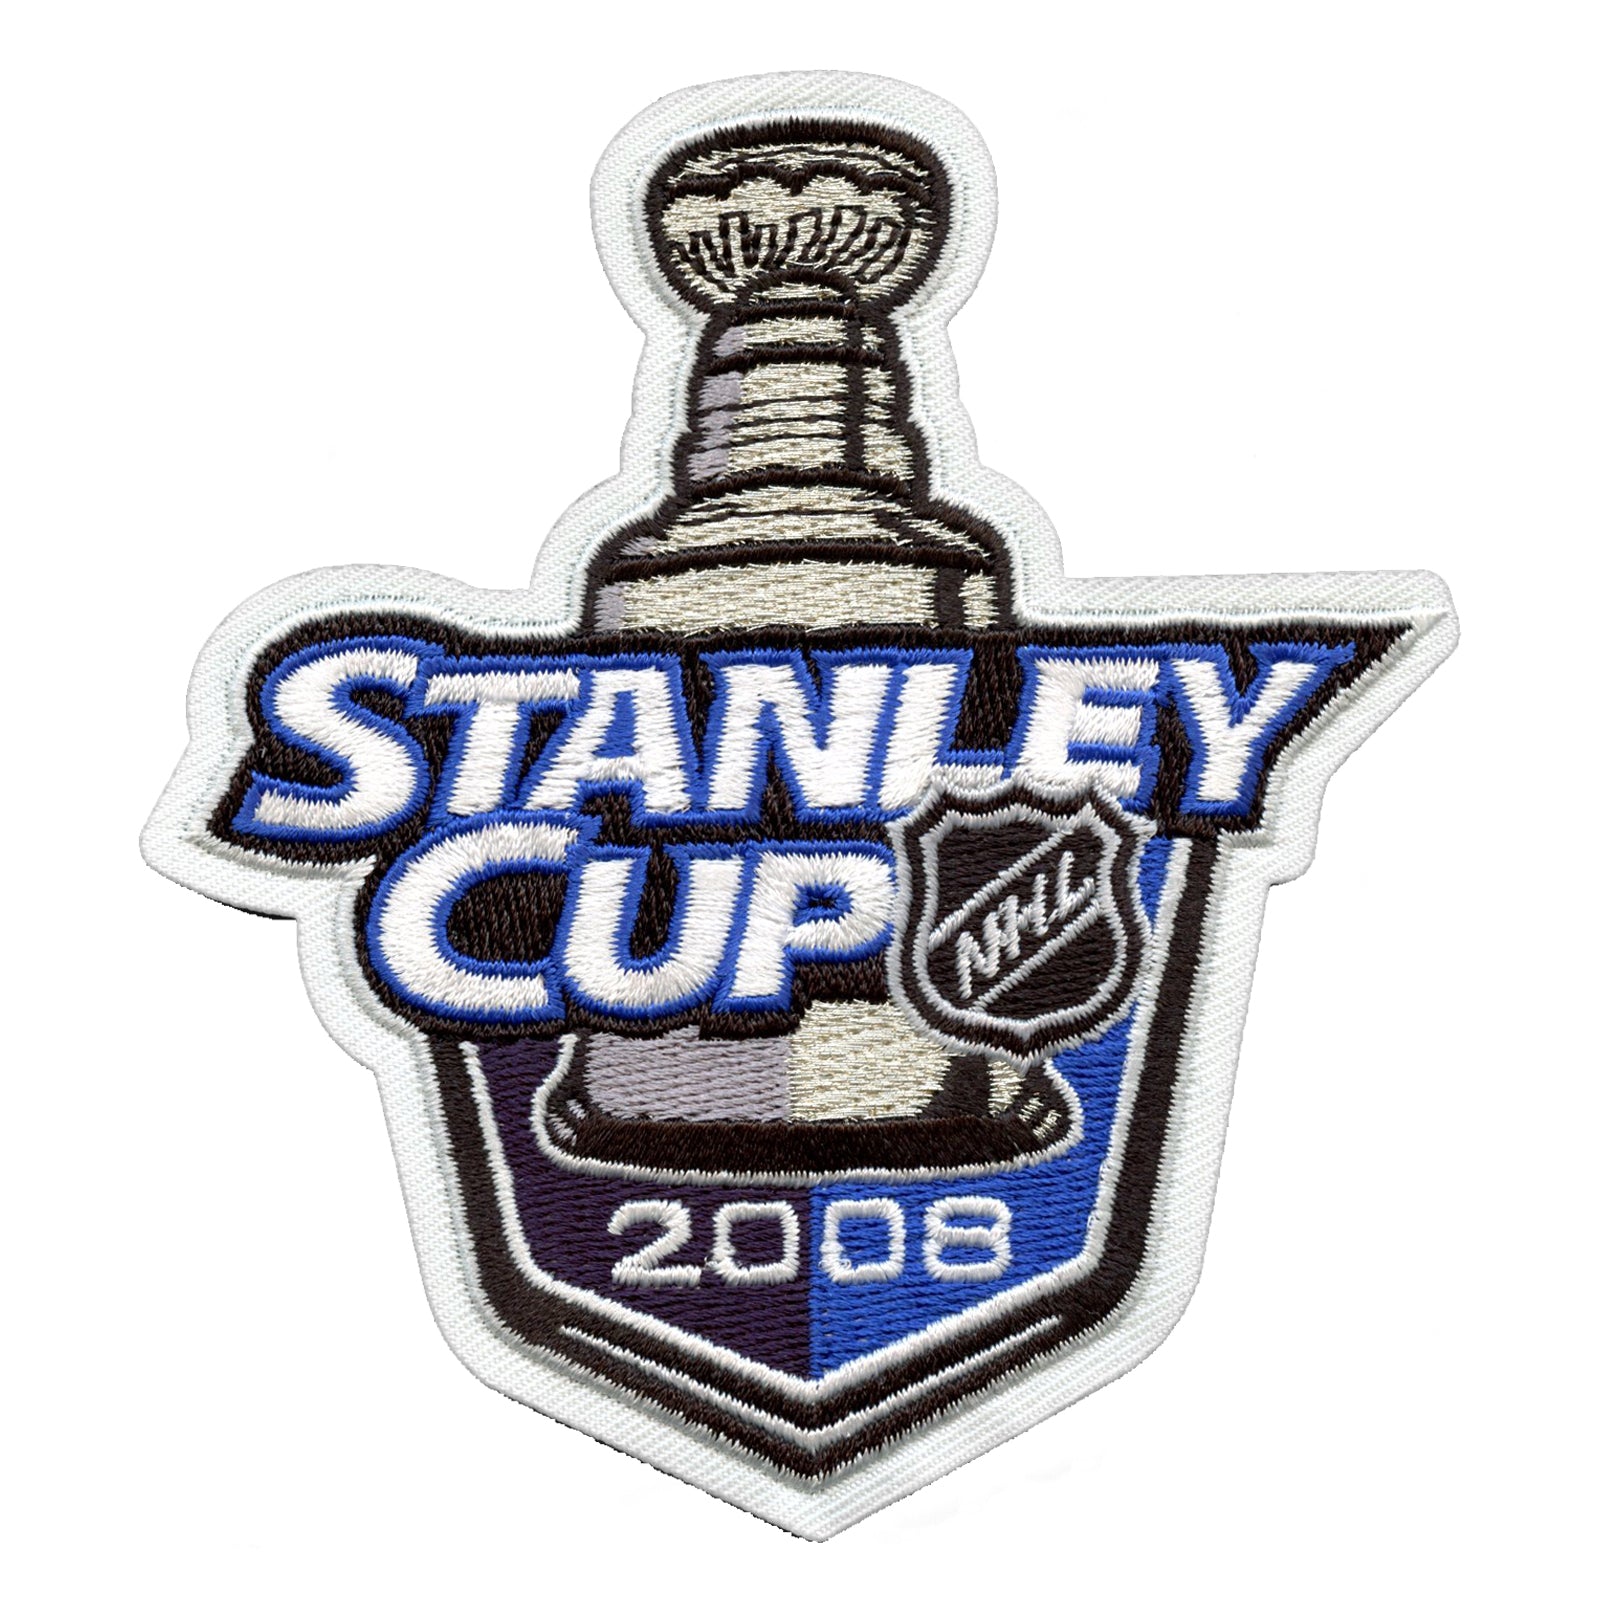 National Emblem 2019 NHL Stanley Cup Final Patch